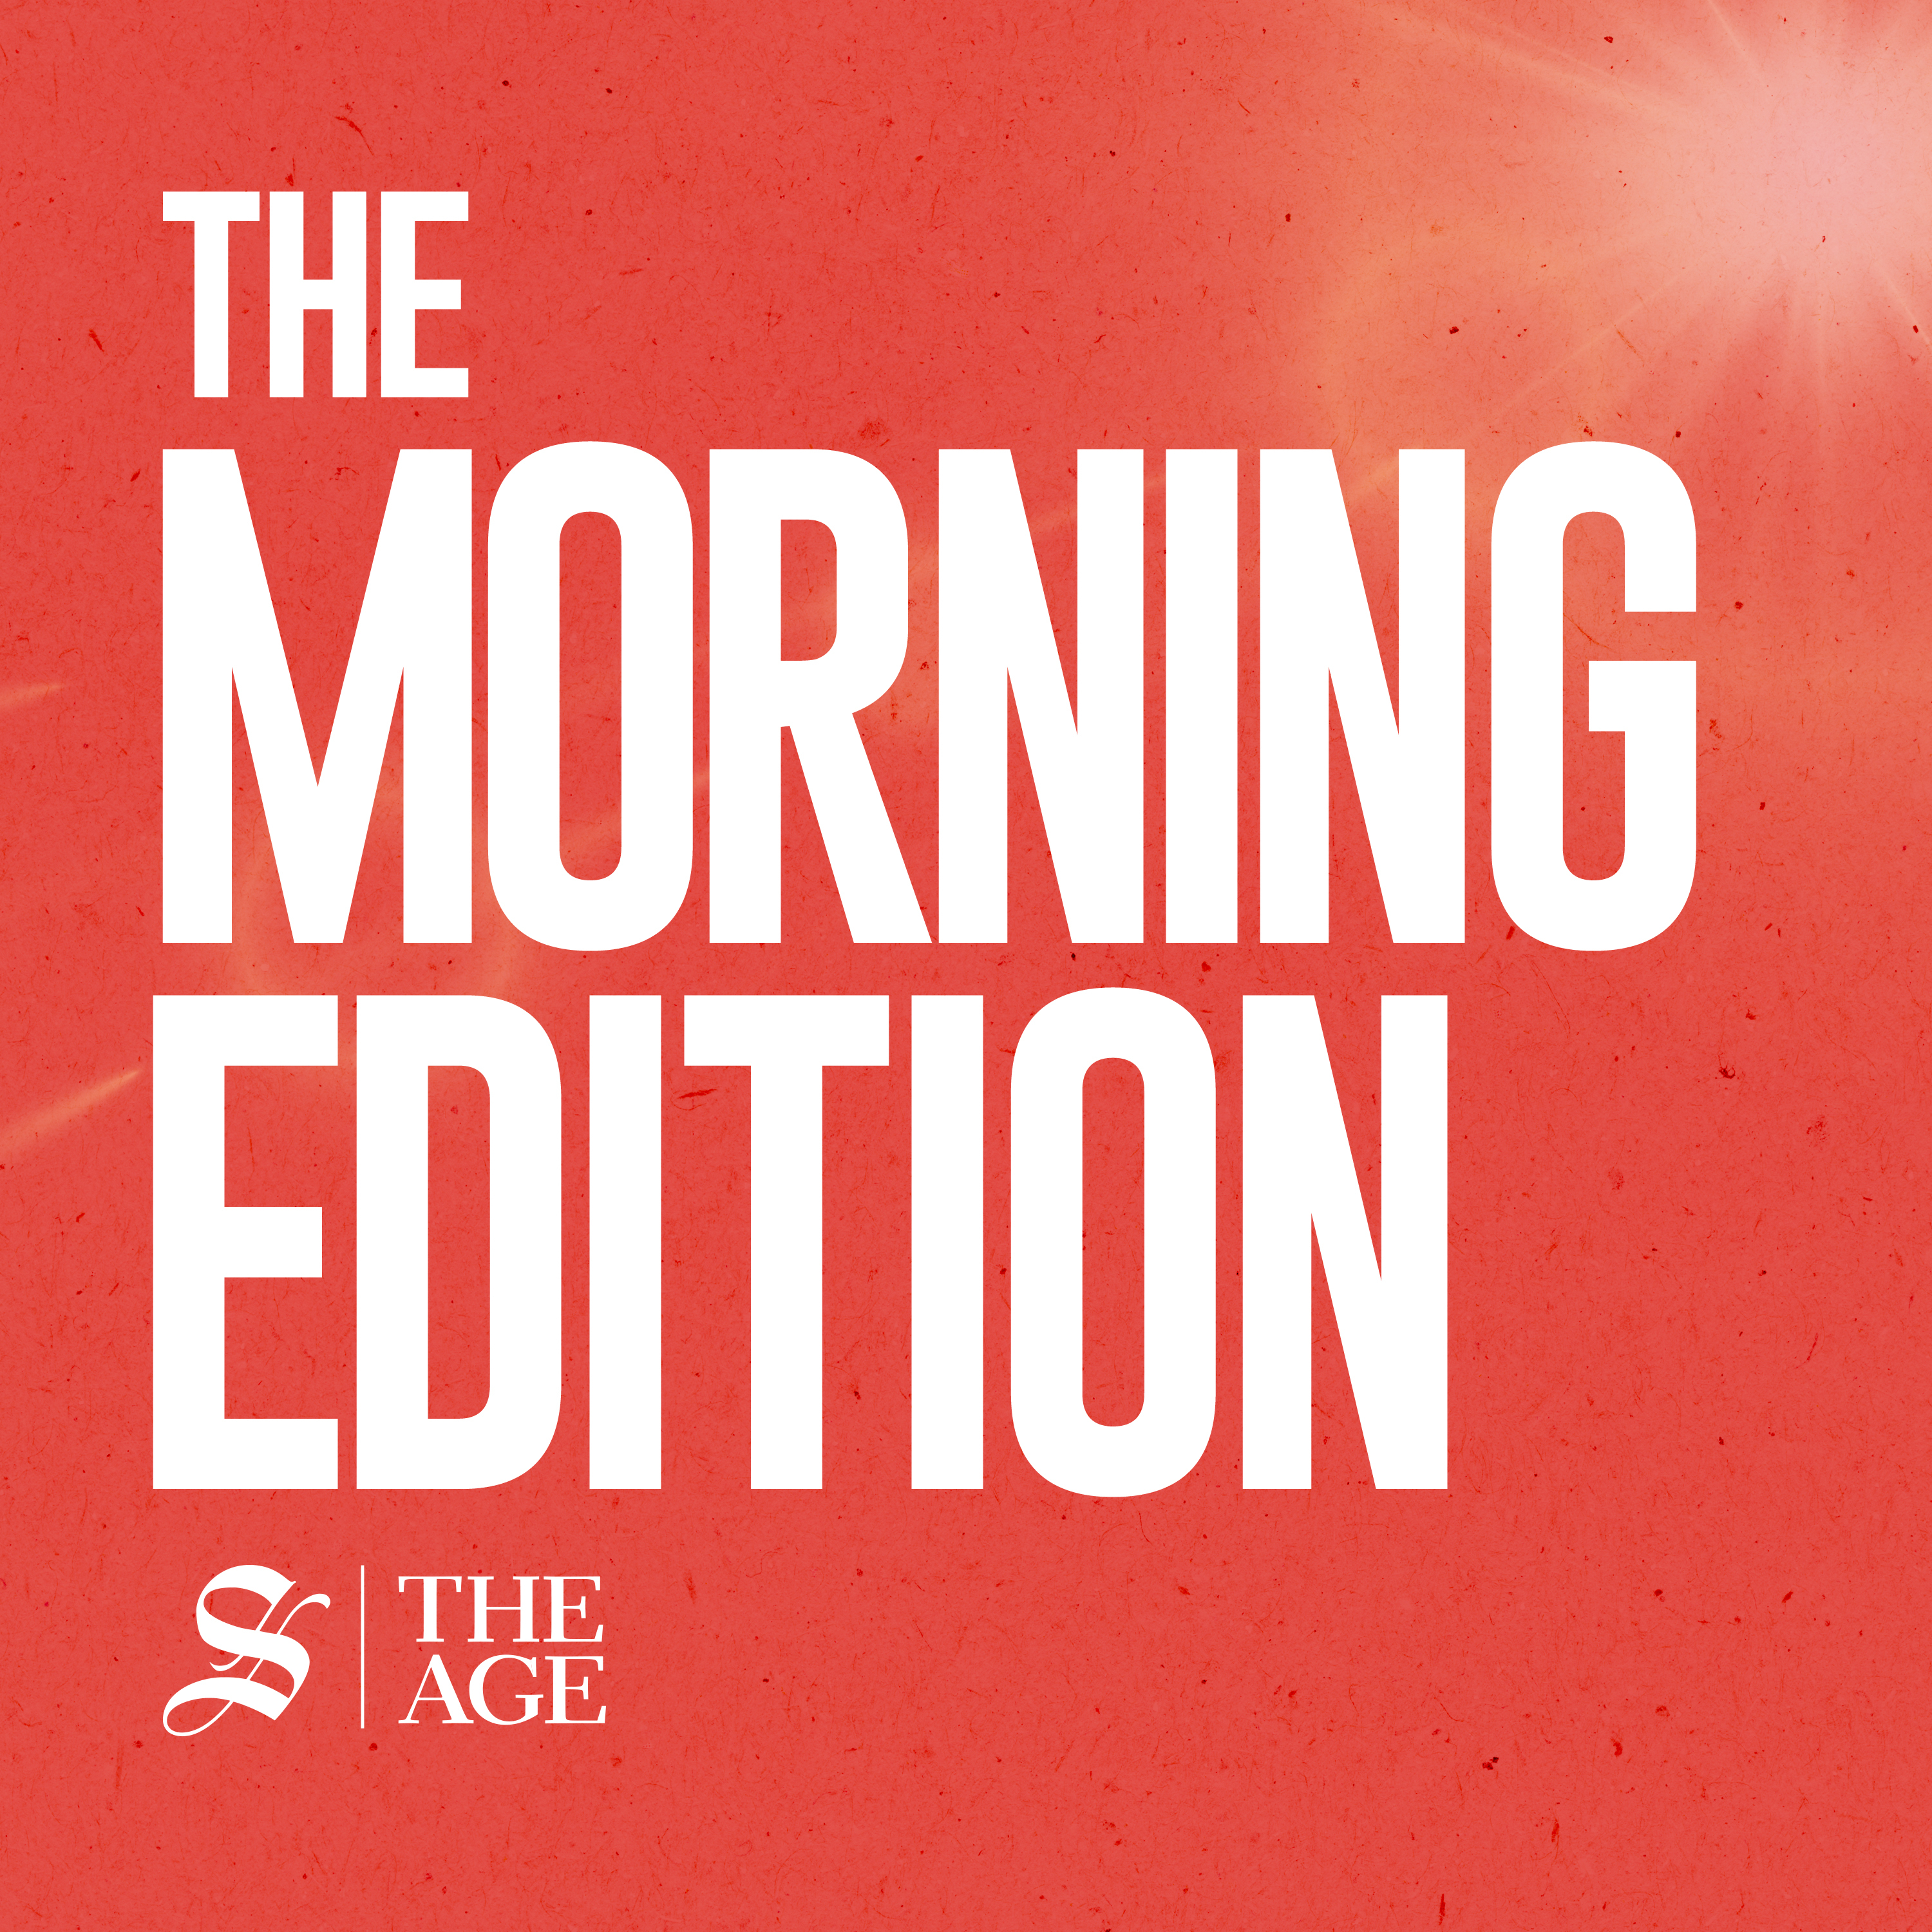 The Sydney Morning Herald celebrates 190 years of publication